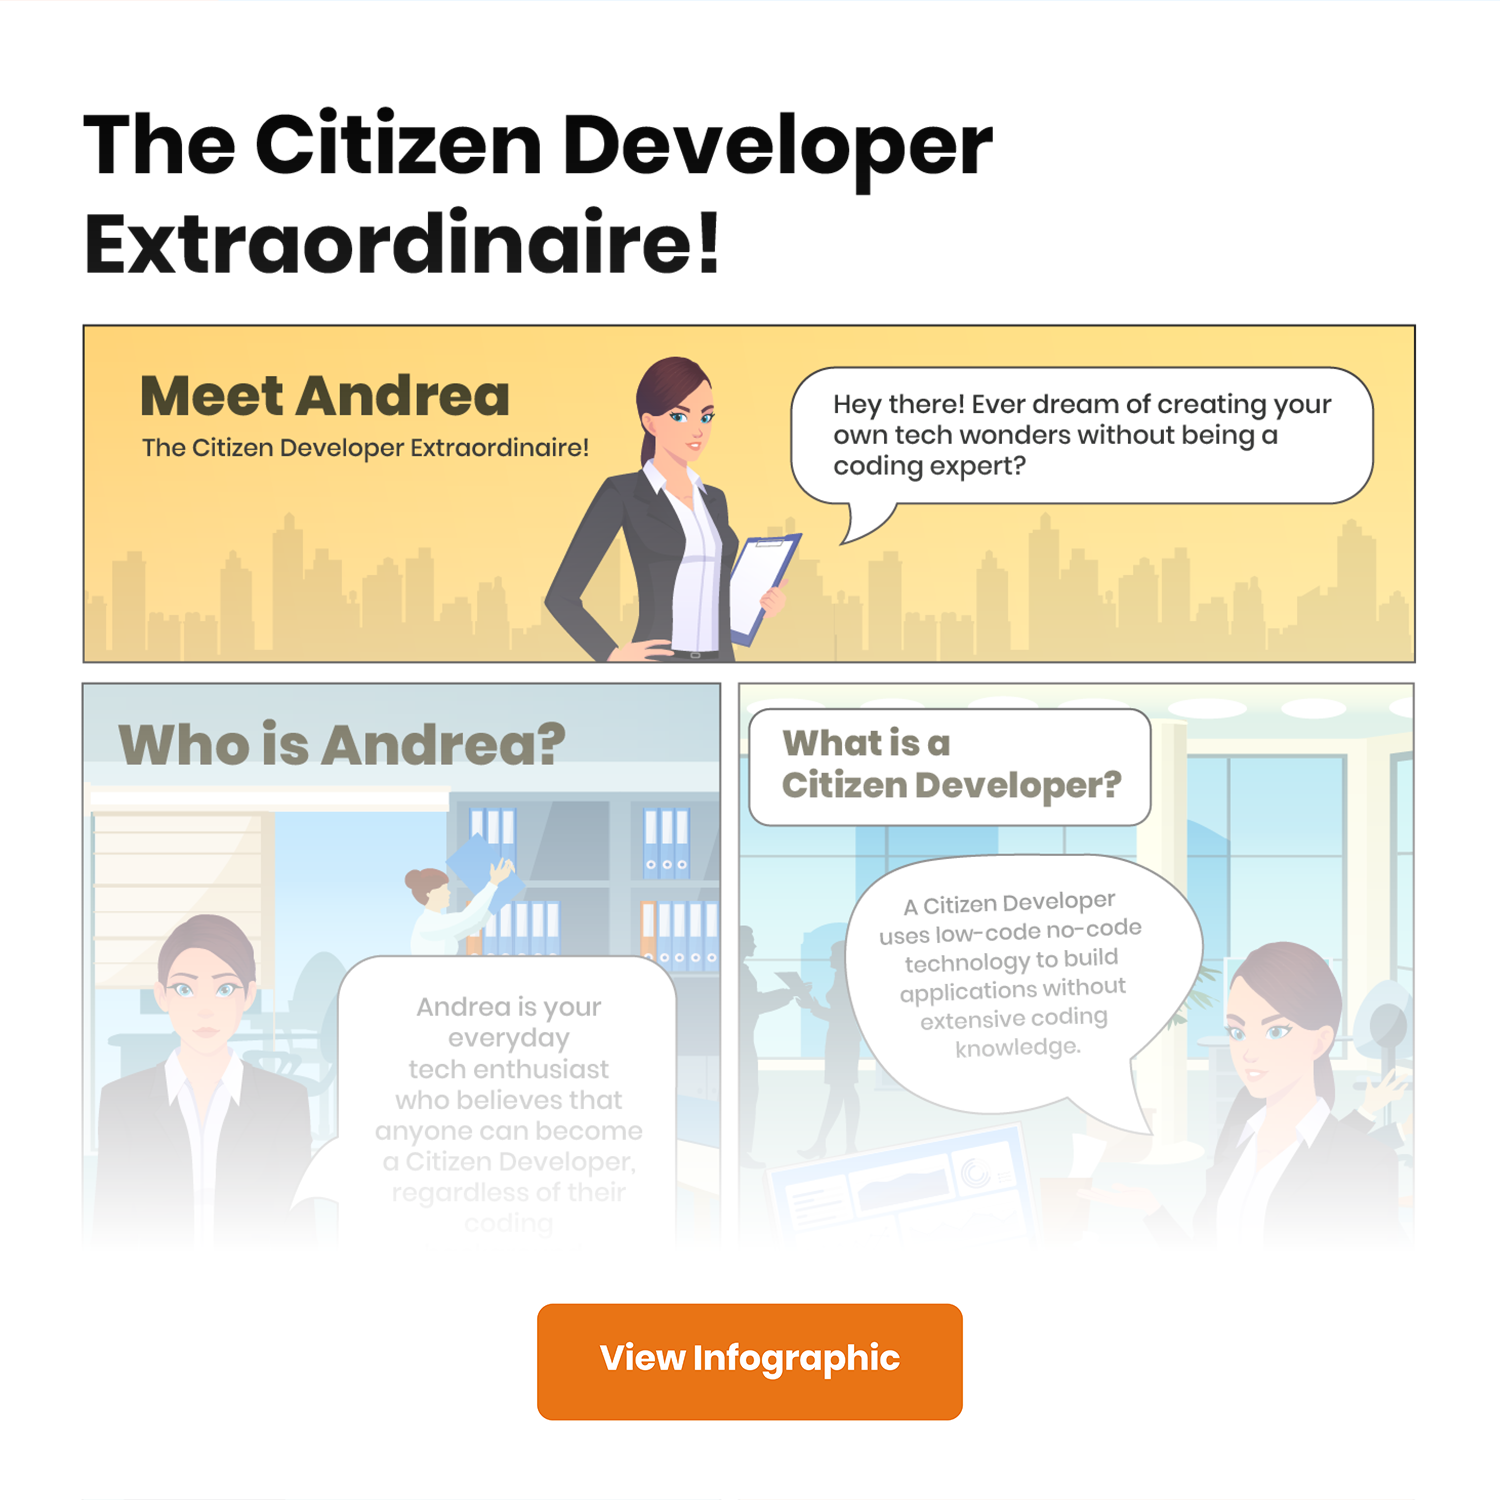 Who is a citizen developer